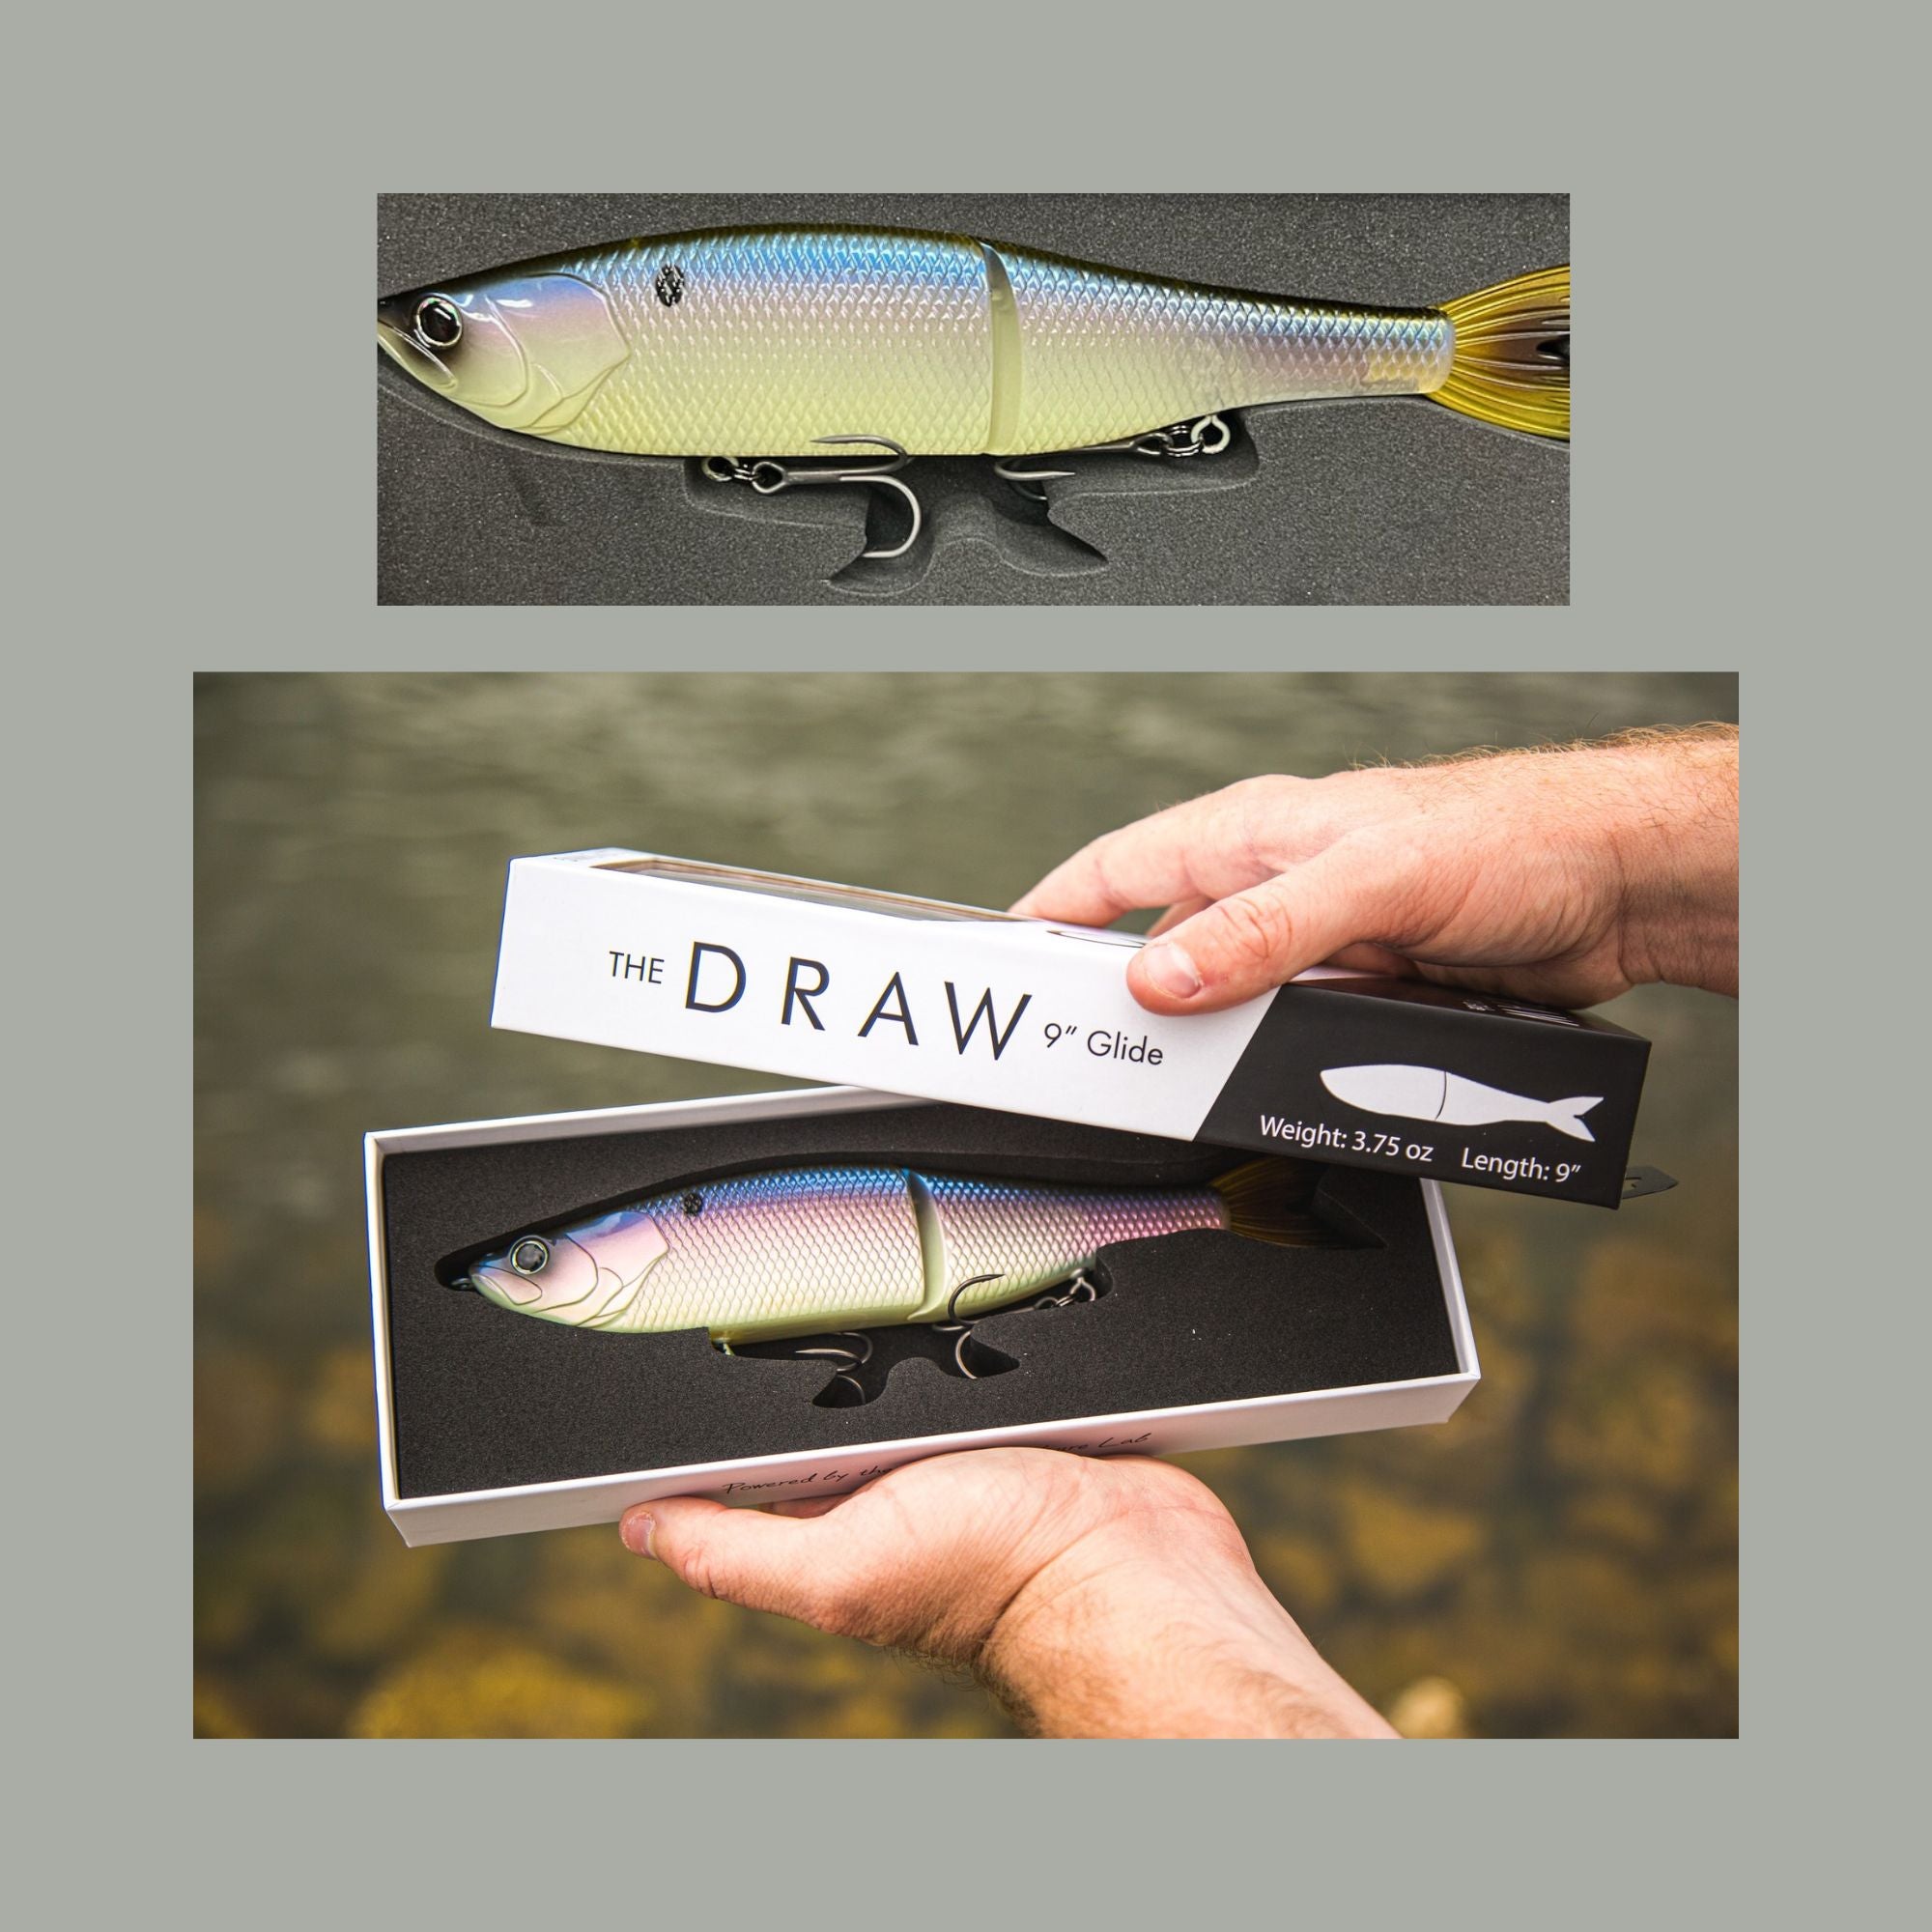 The Draw, 9 Glide Bait, 6th Sense, Ben Milliken, Fishing Store